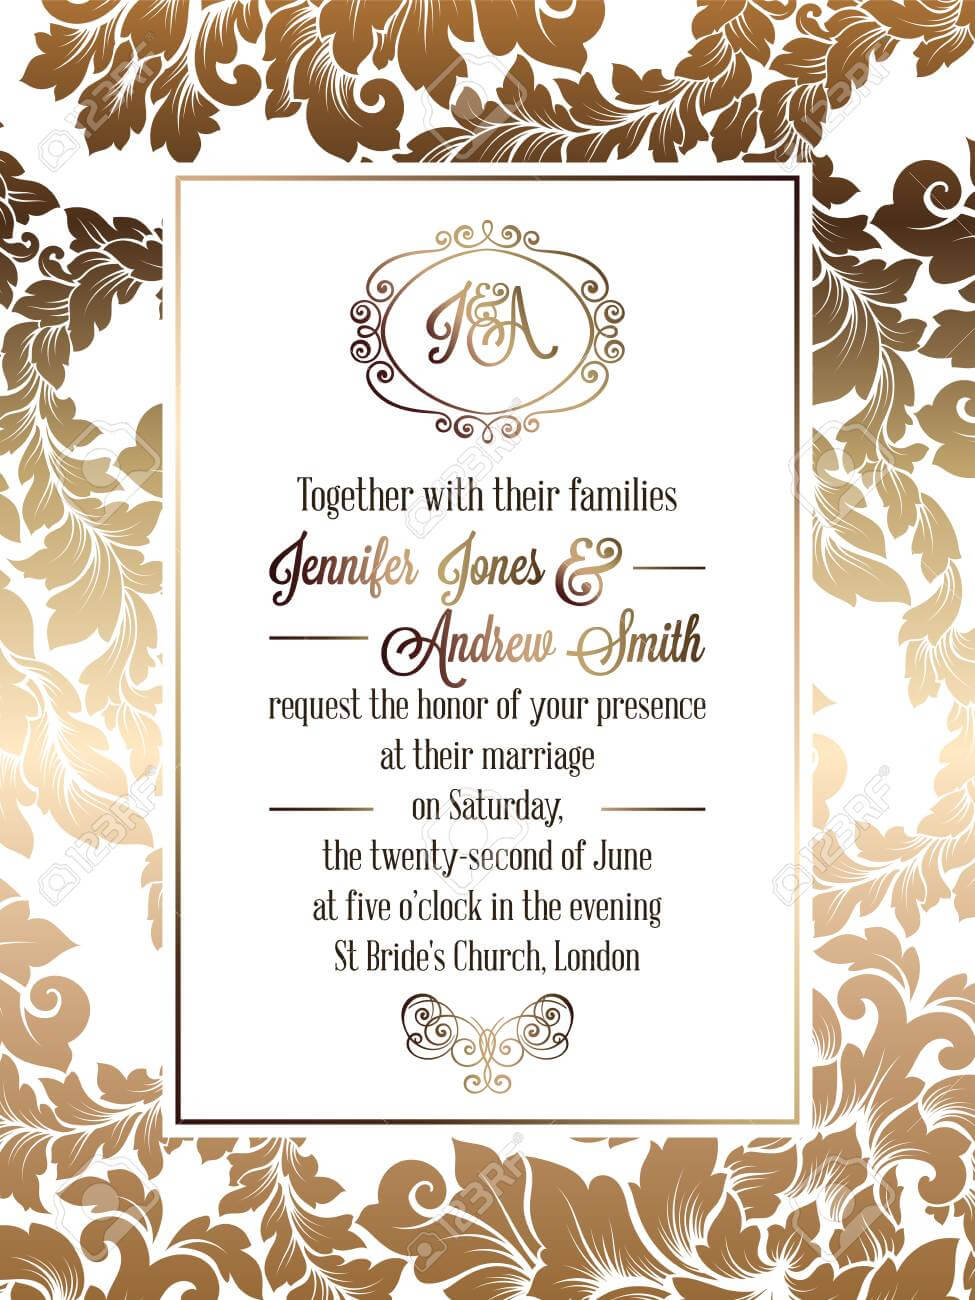 Vintage Baroque Style Wedding Invitation Card Template.. Elegant.. In Church Wedding Invitation Card Template